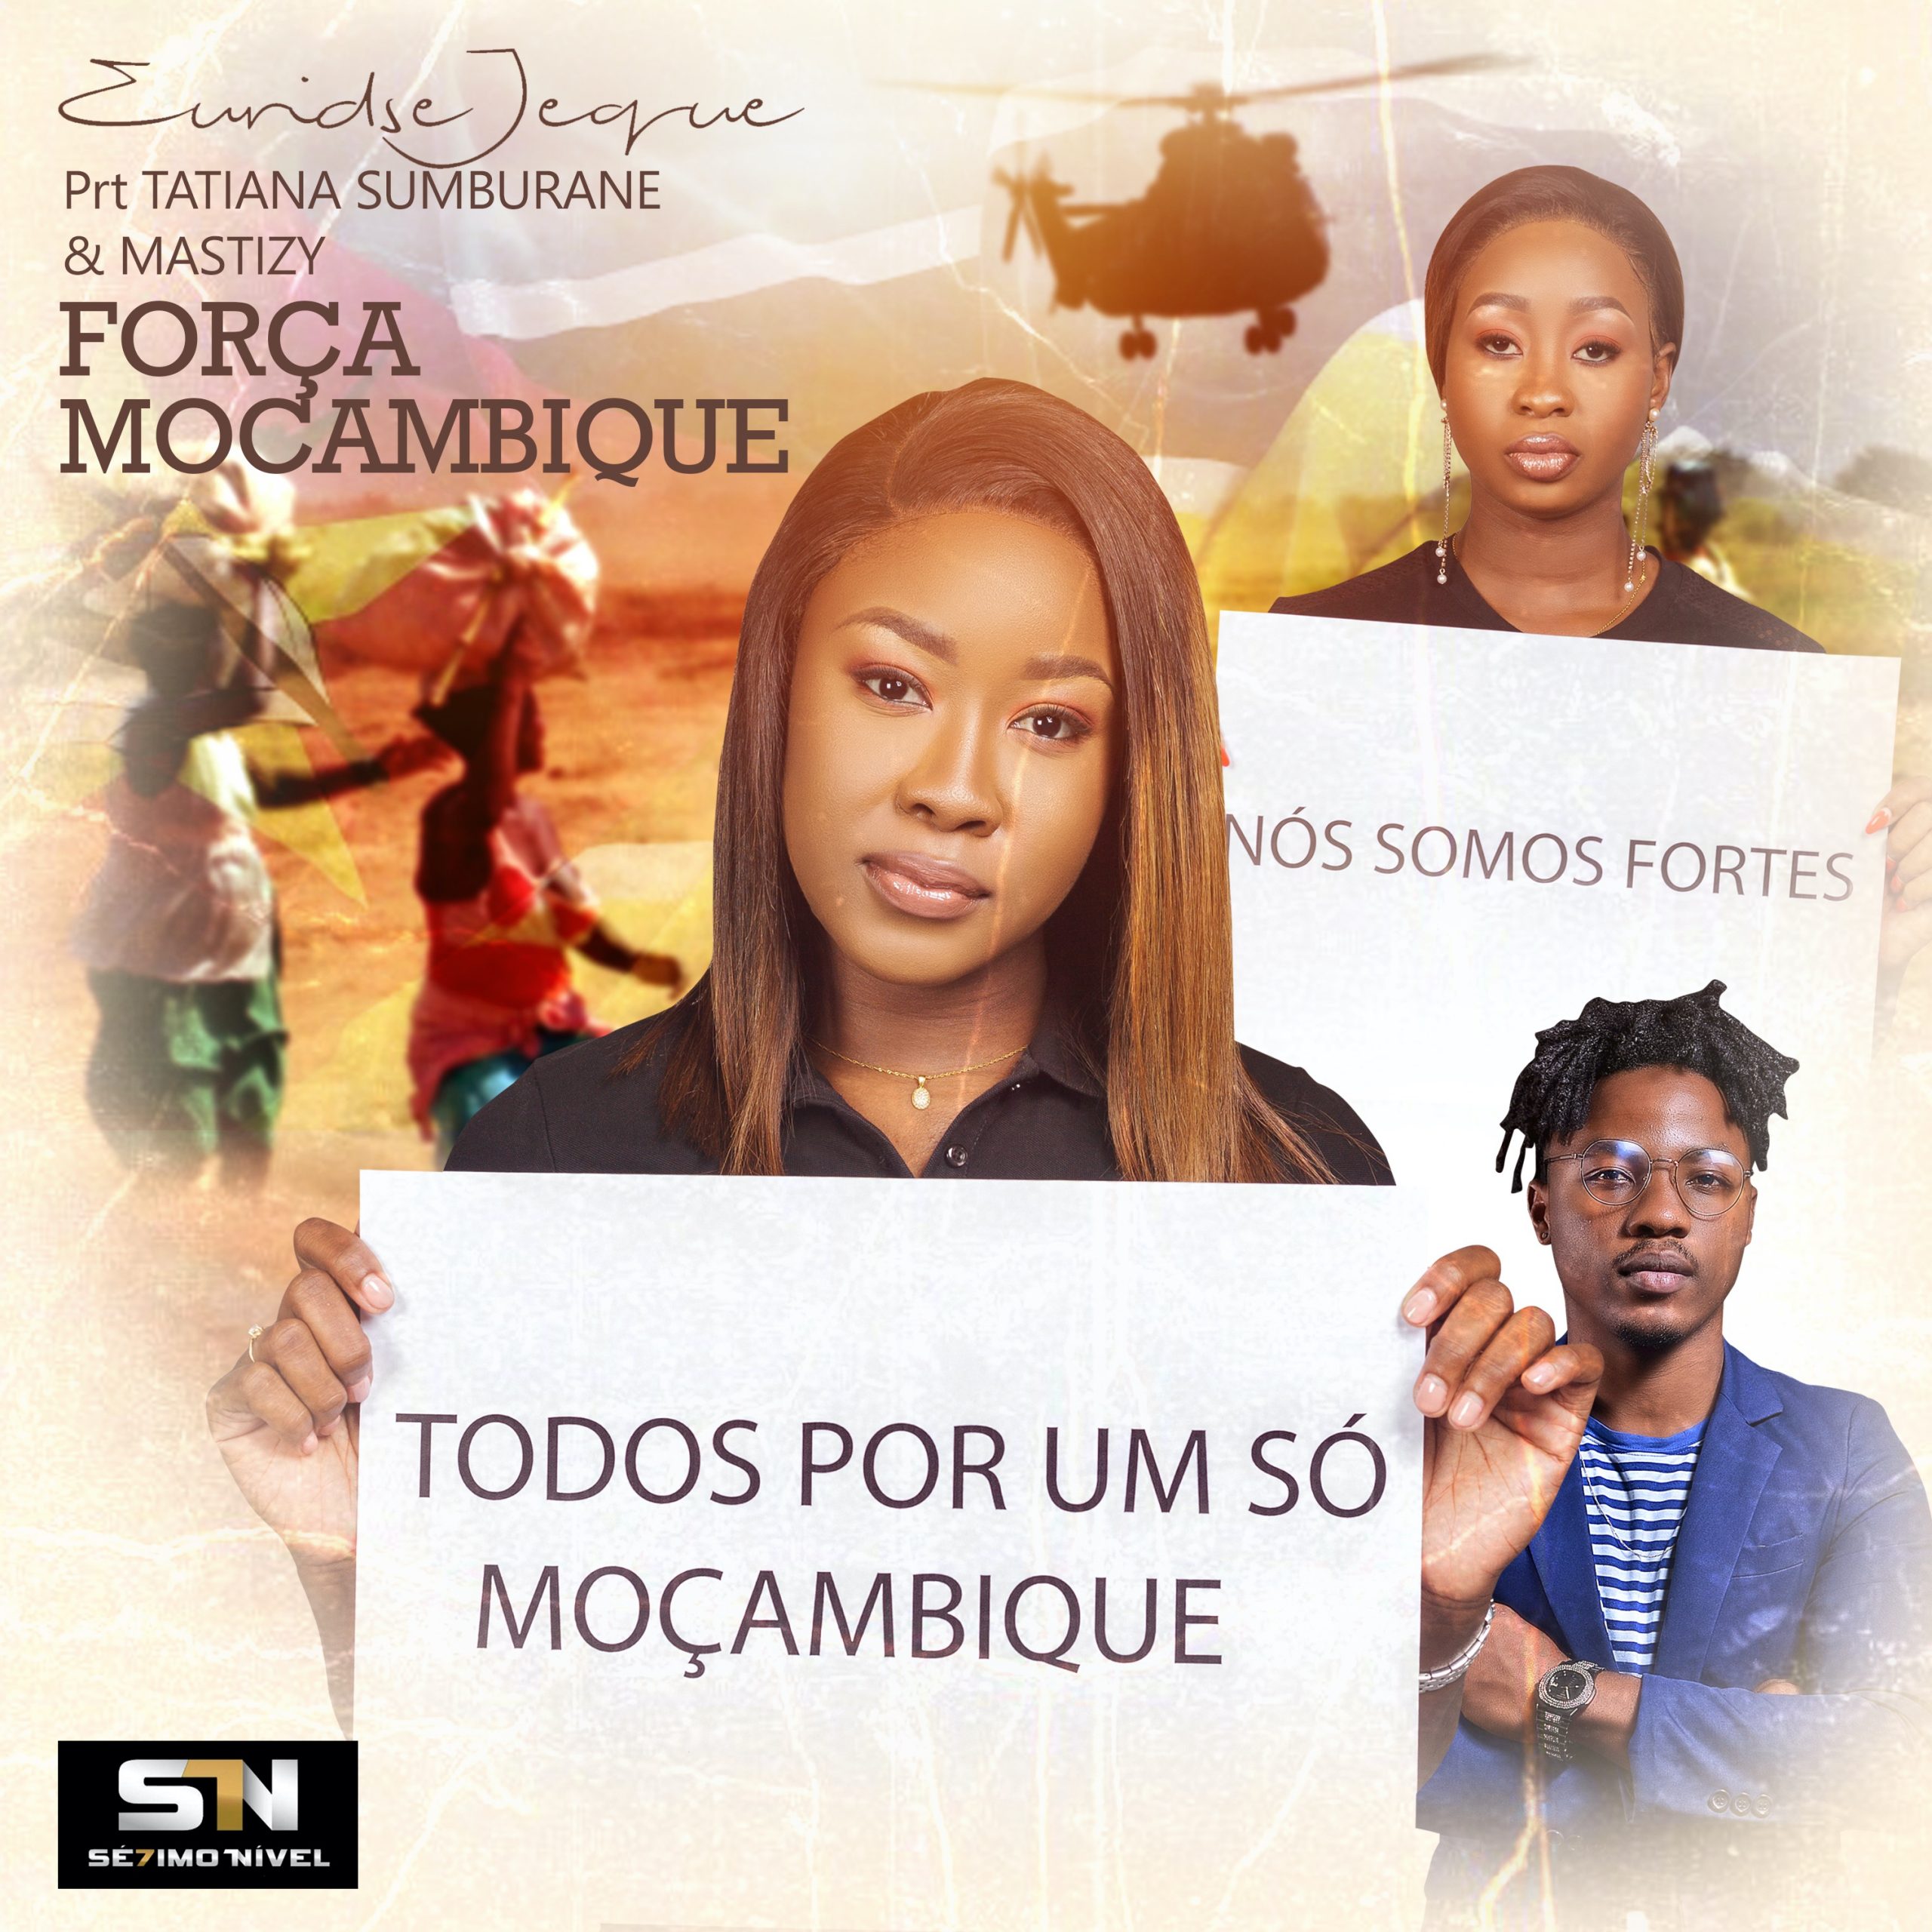 Euridse Jeque – Força Moçambique (feat. Tatiana Sumburane & Mastizy)